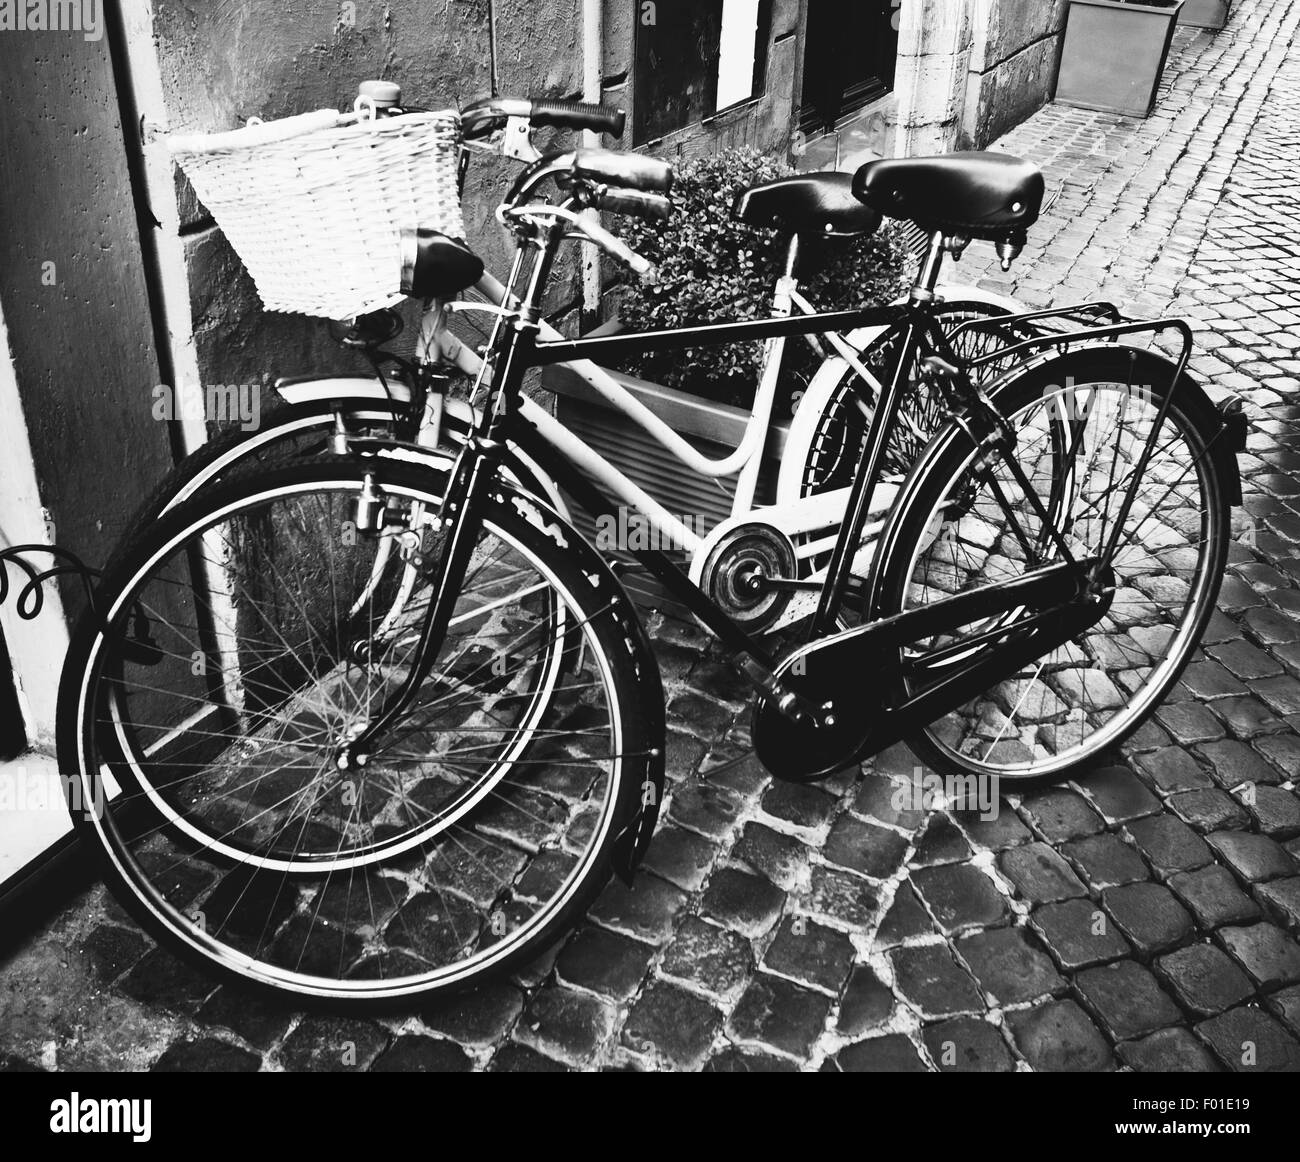 Two classic vintage retro city bicycles, bw photo, Rome, Italy Stock Photo